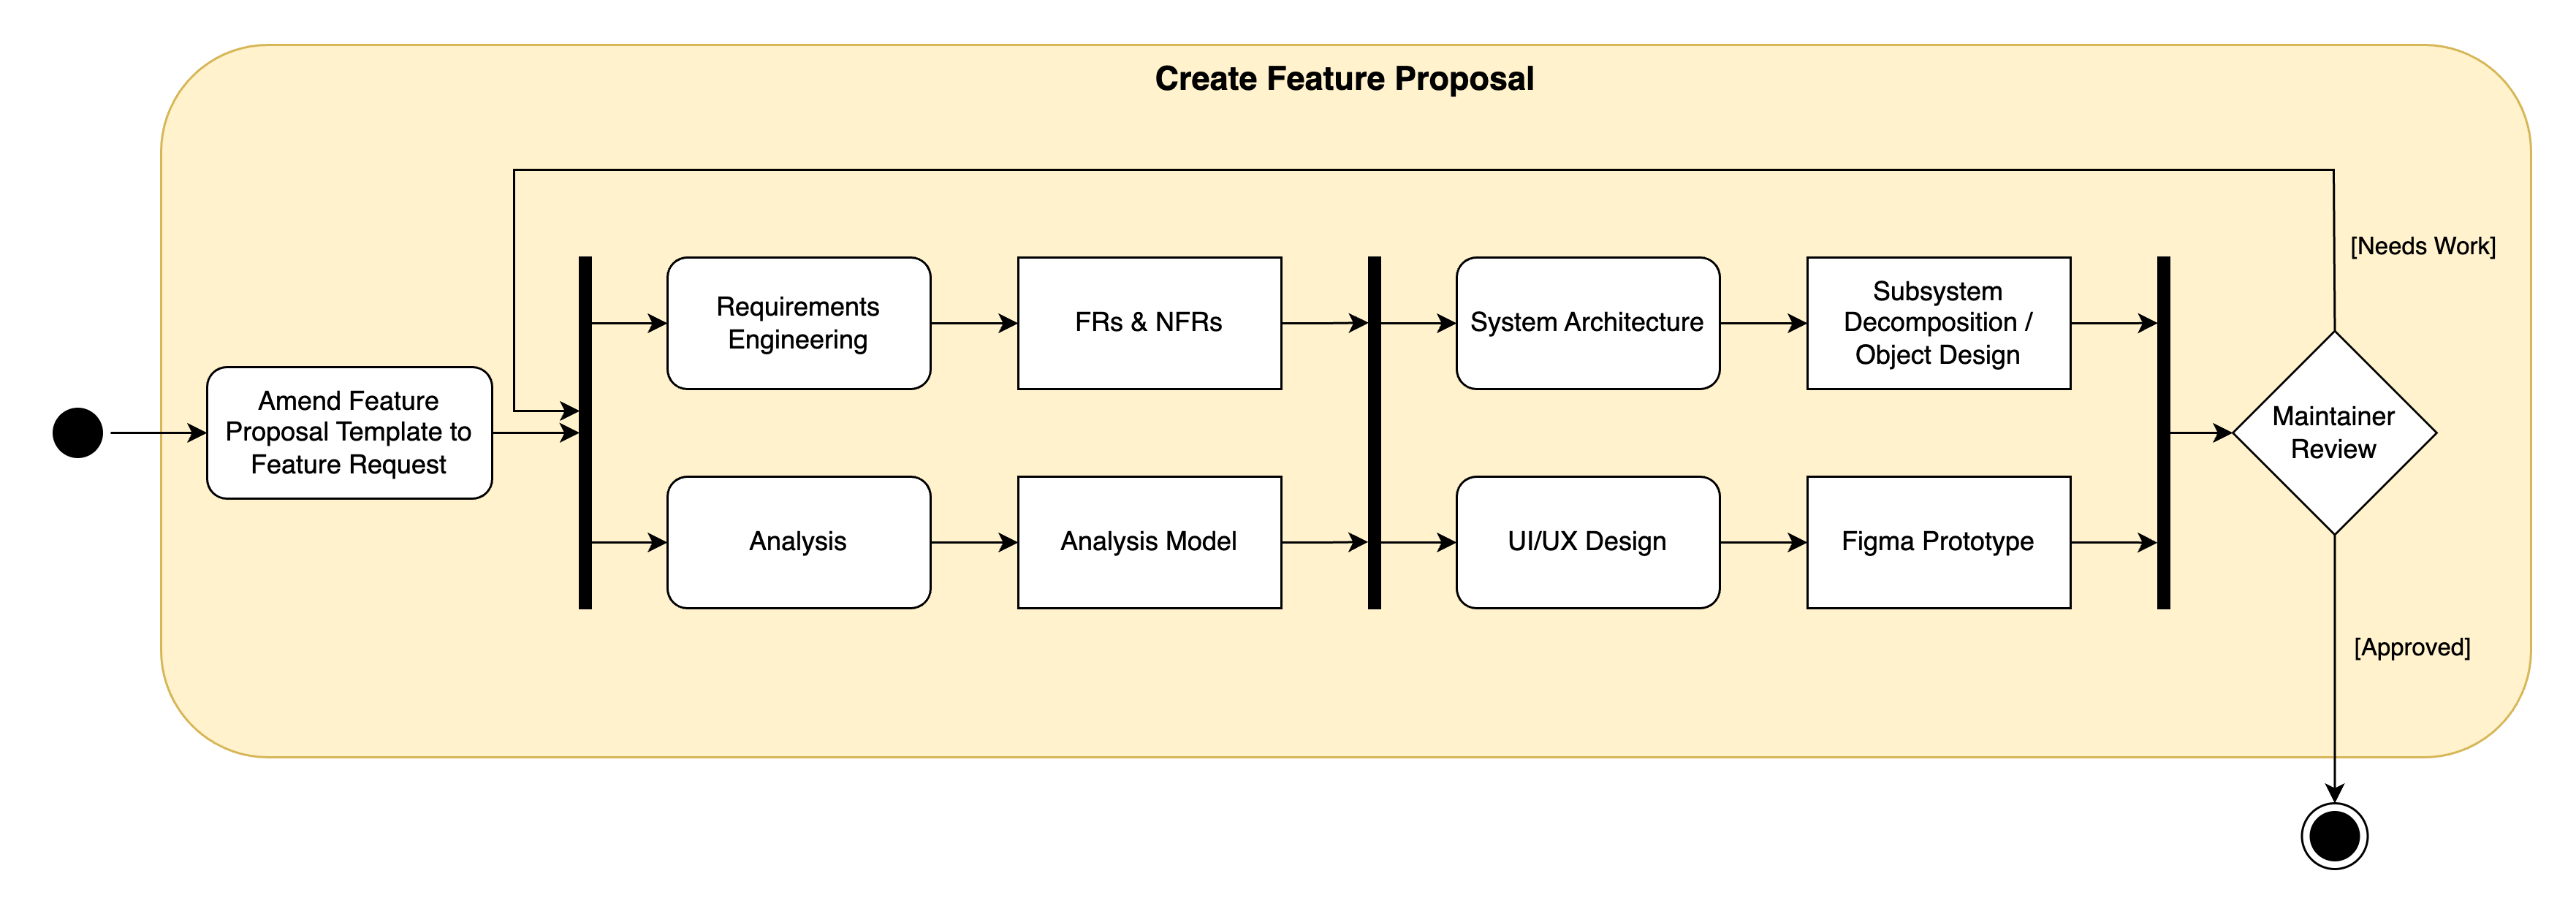 Create a Feature Proposal - Activity Diagram